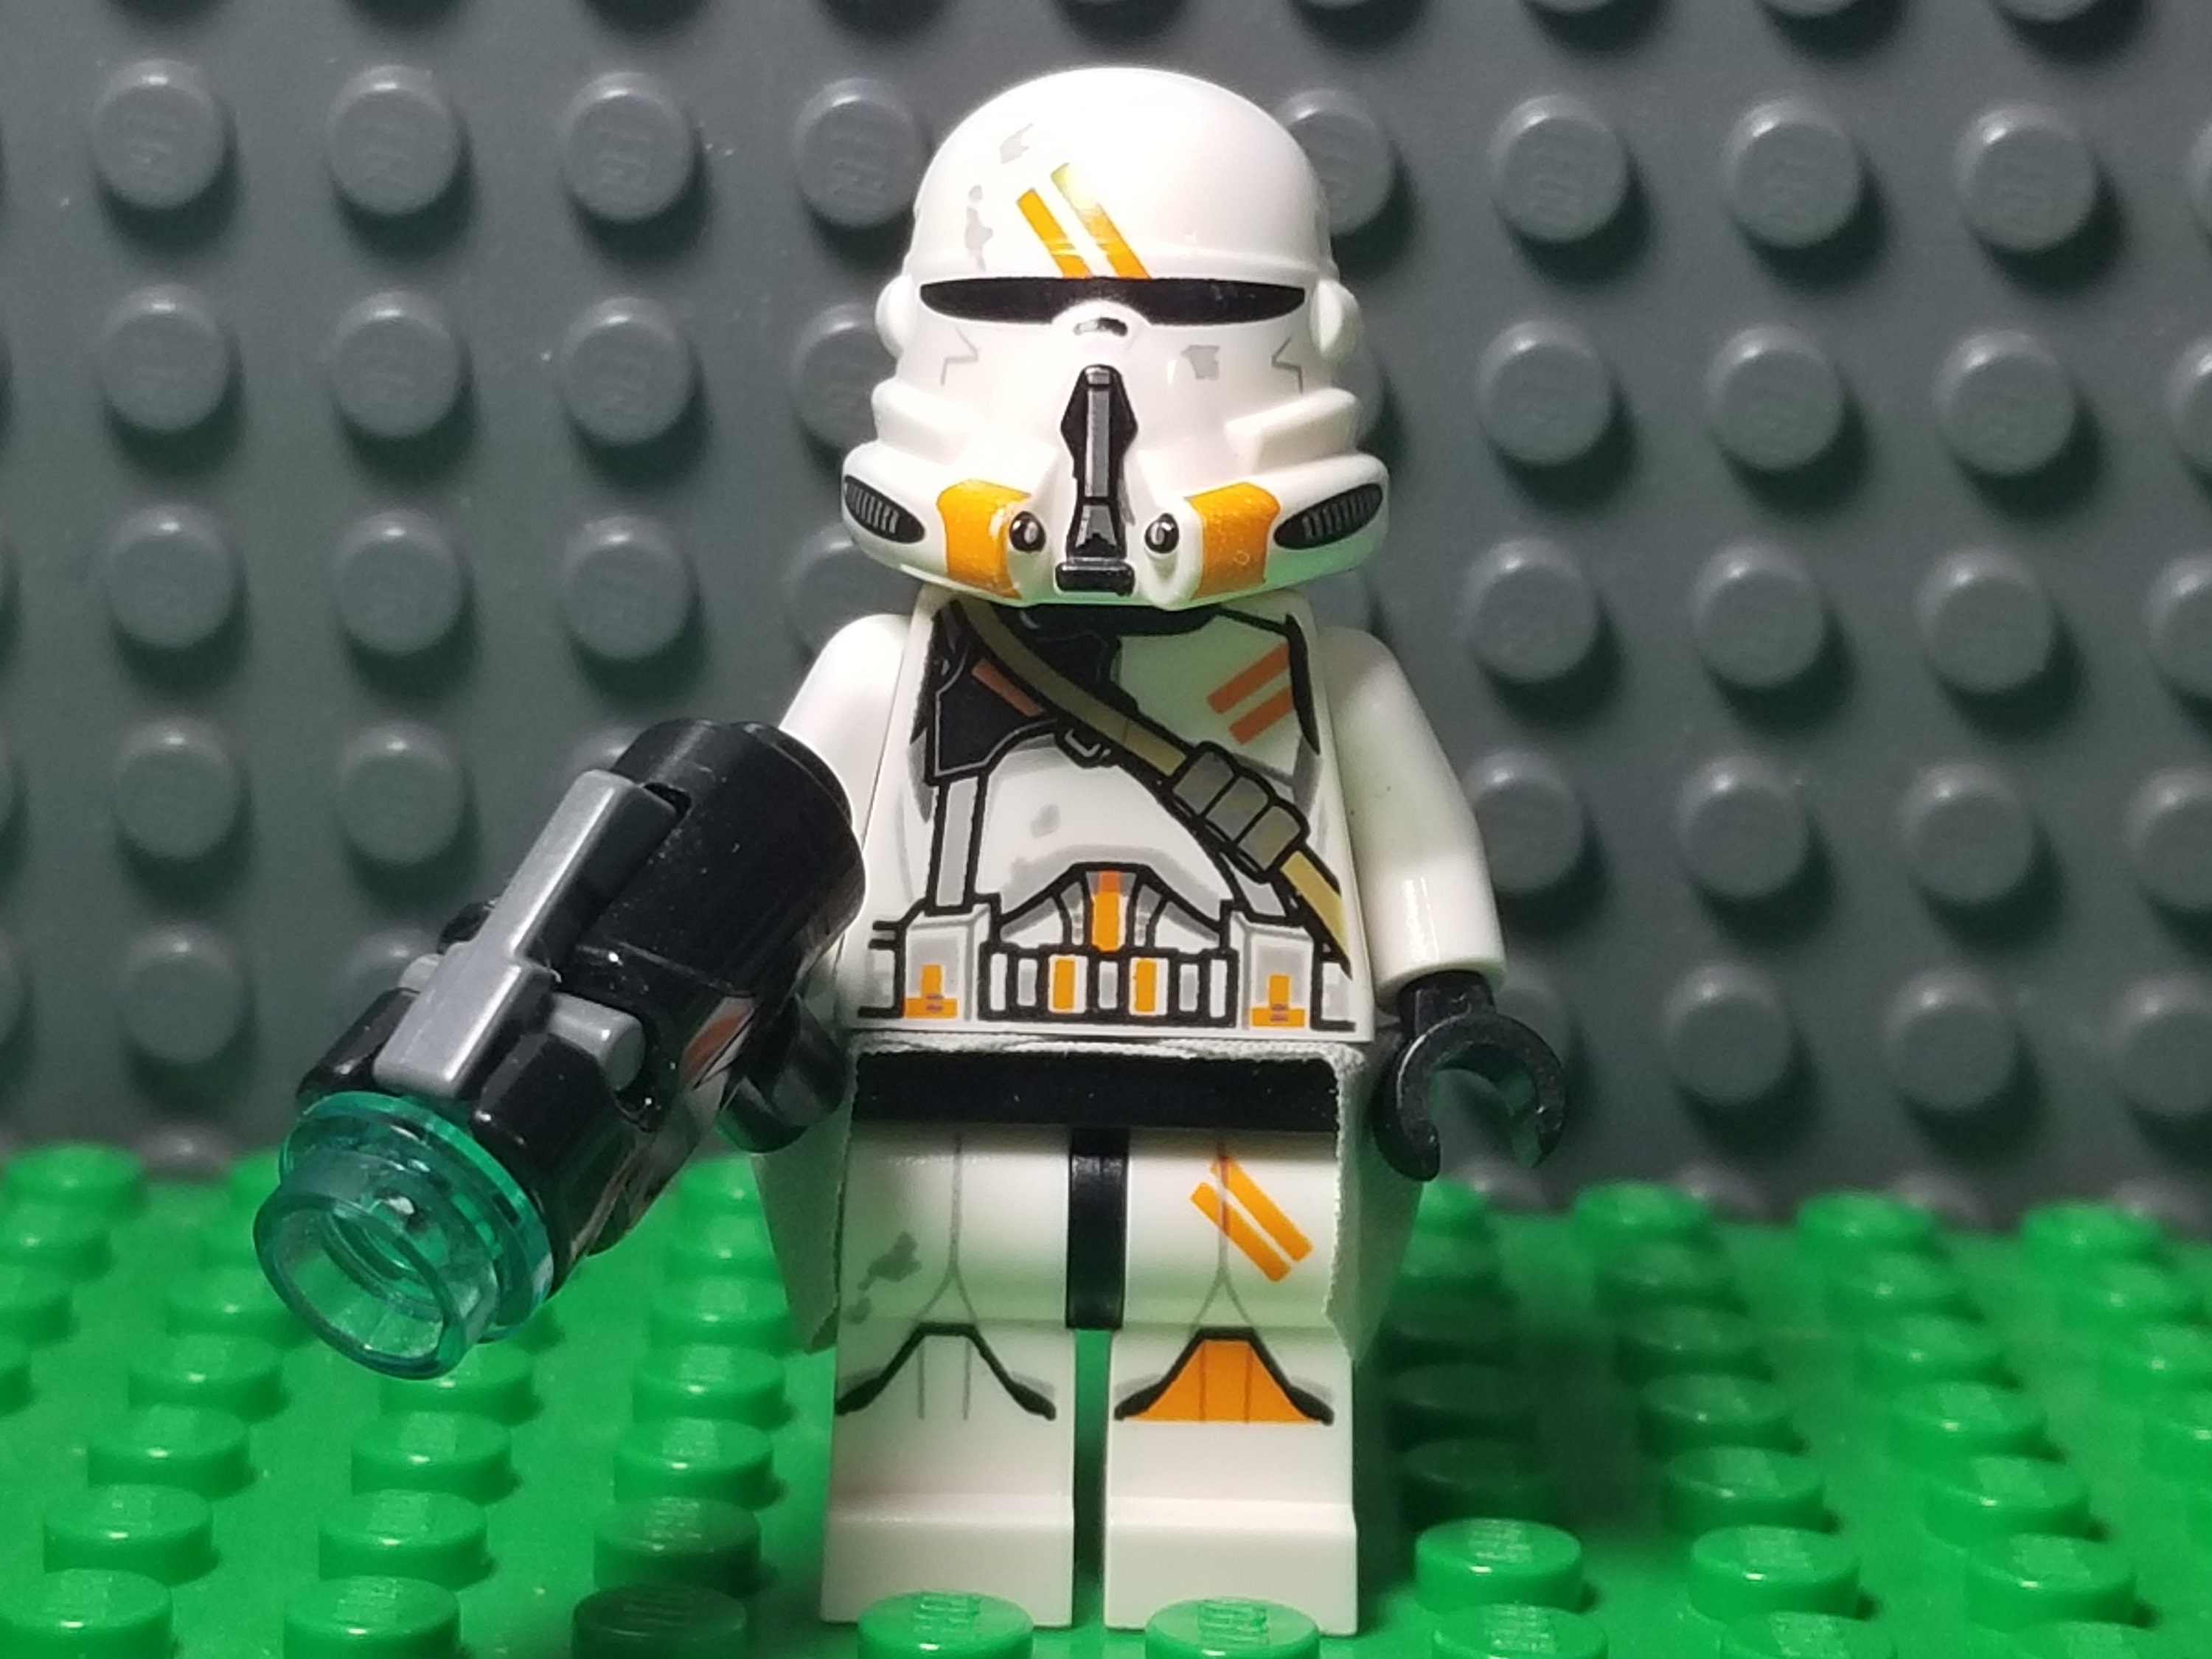 Lego Star Wars Minifigure BARC Trooper sw0524 w/ Blaster Rifle Episode 3 